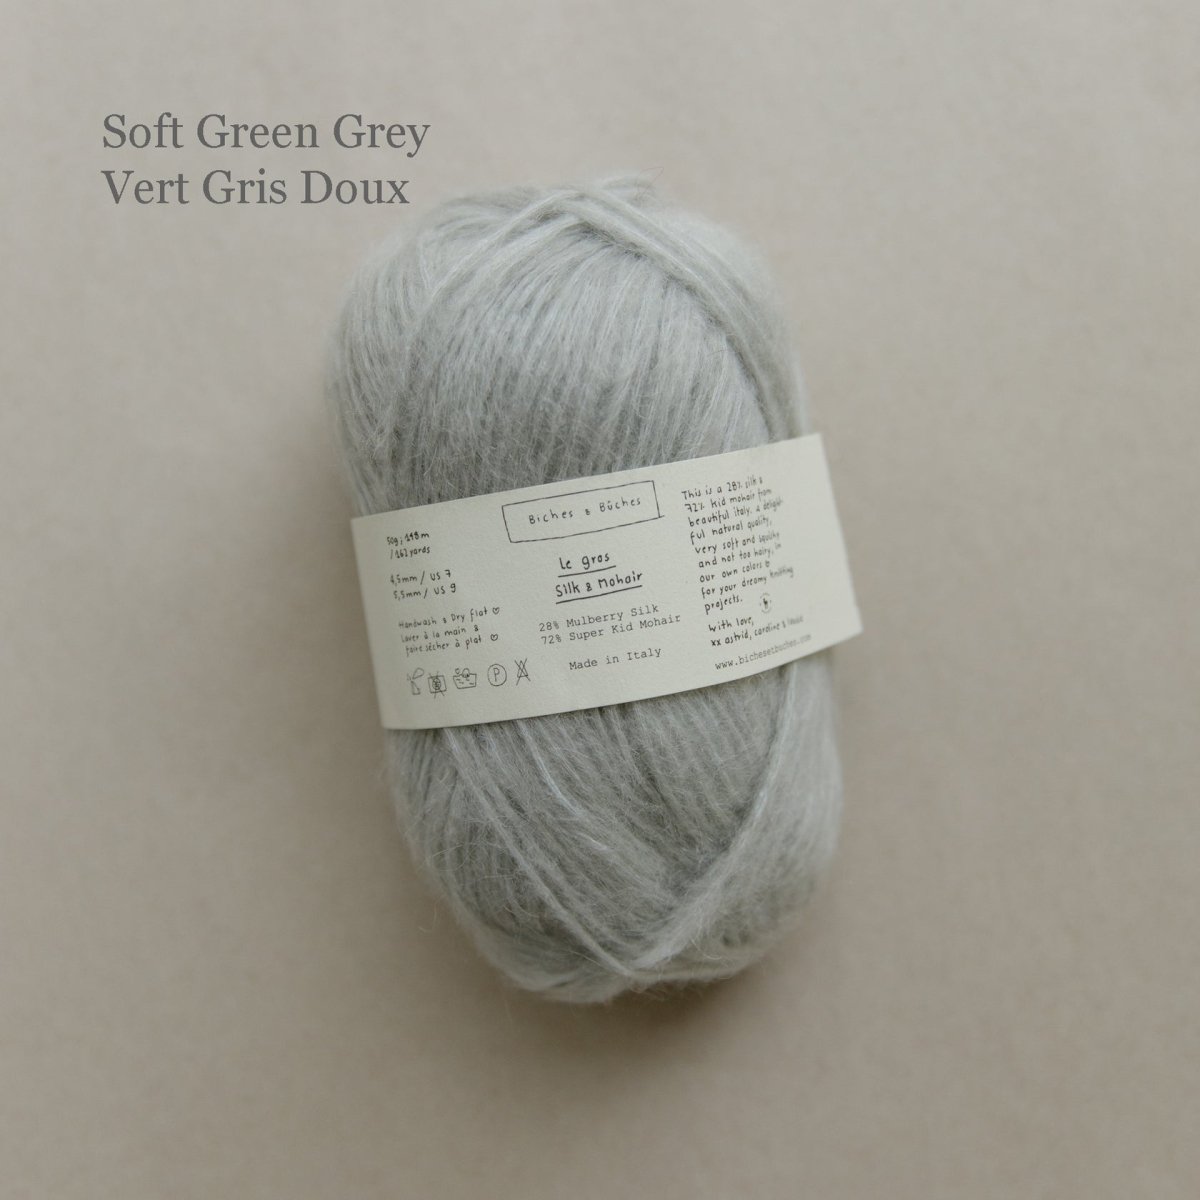 le gros silk & mohair - soft green grey at Wabi Sabi